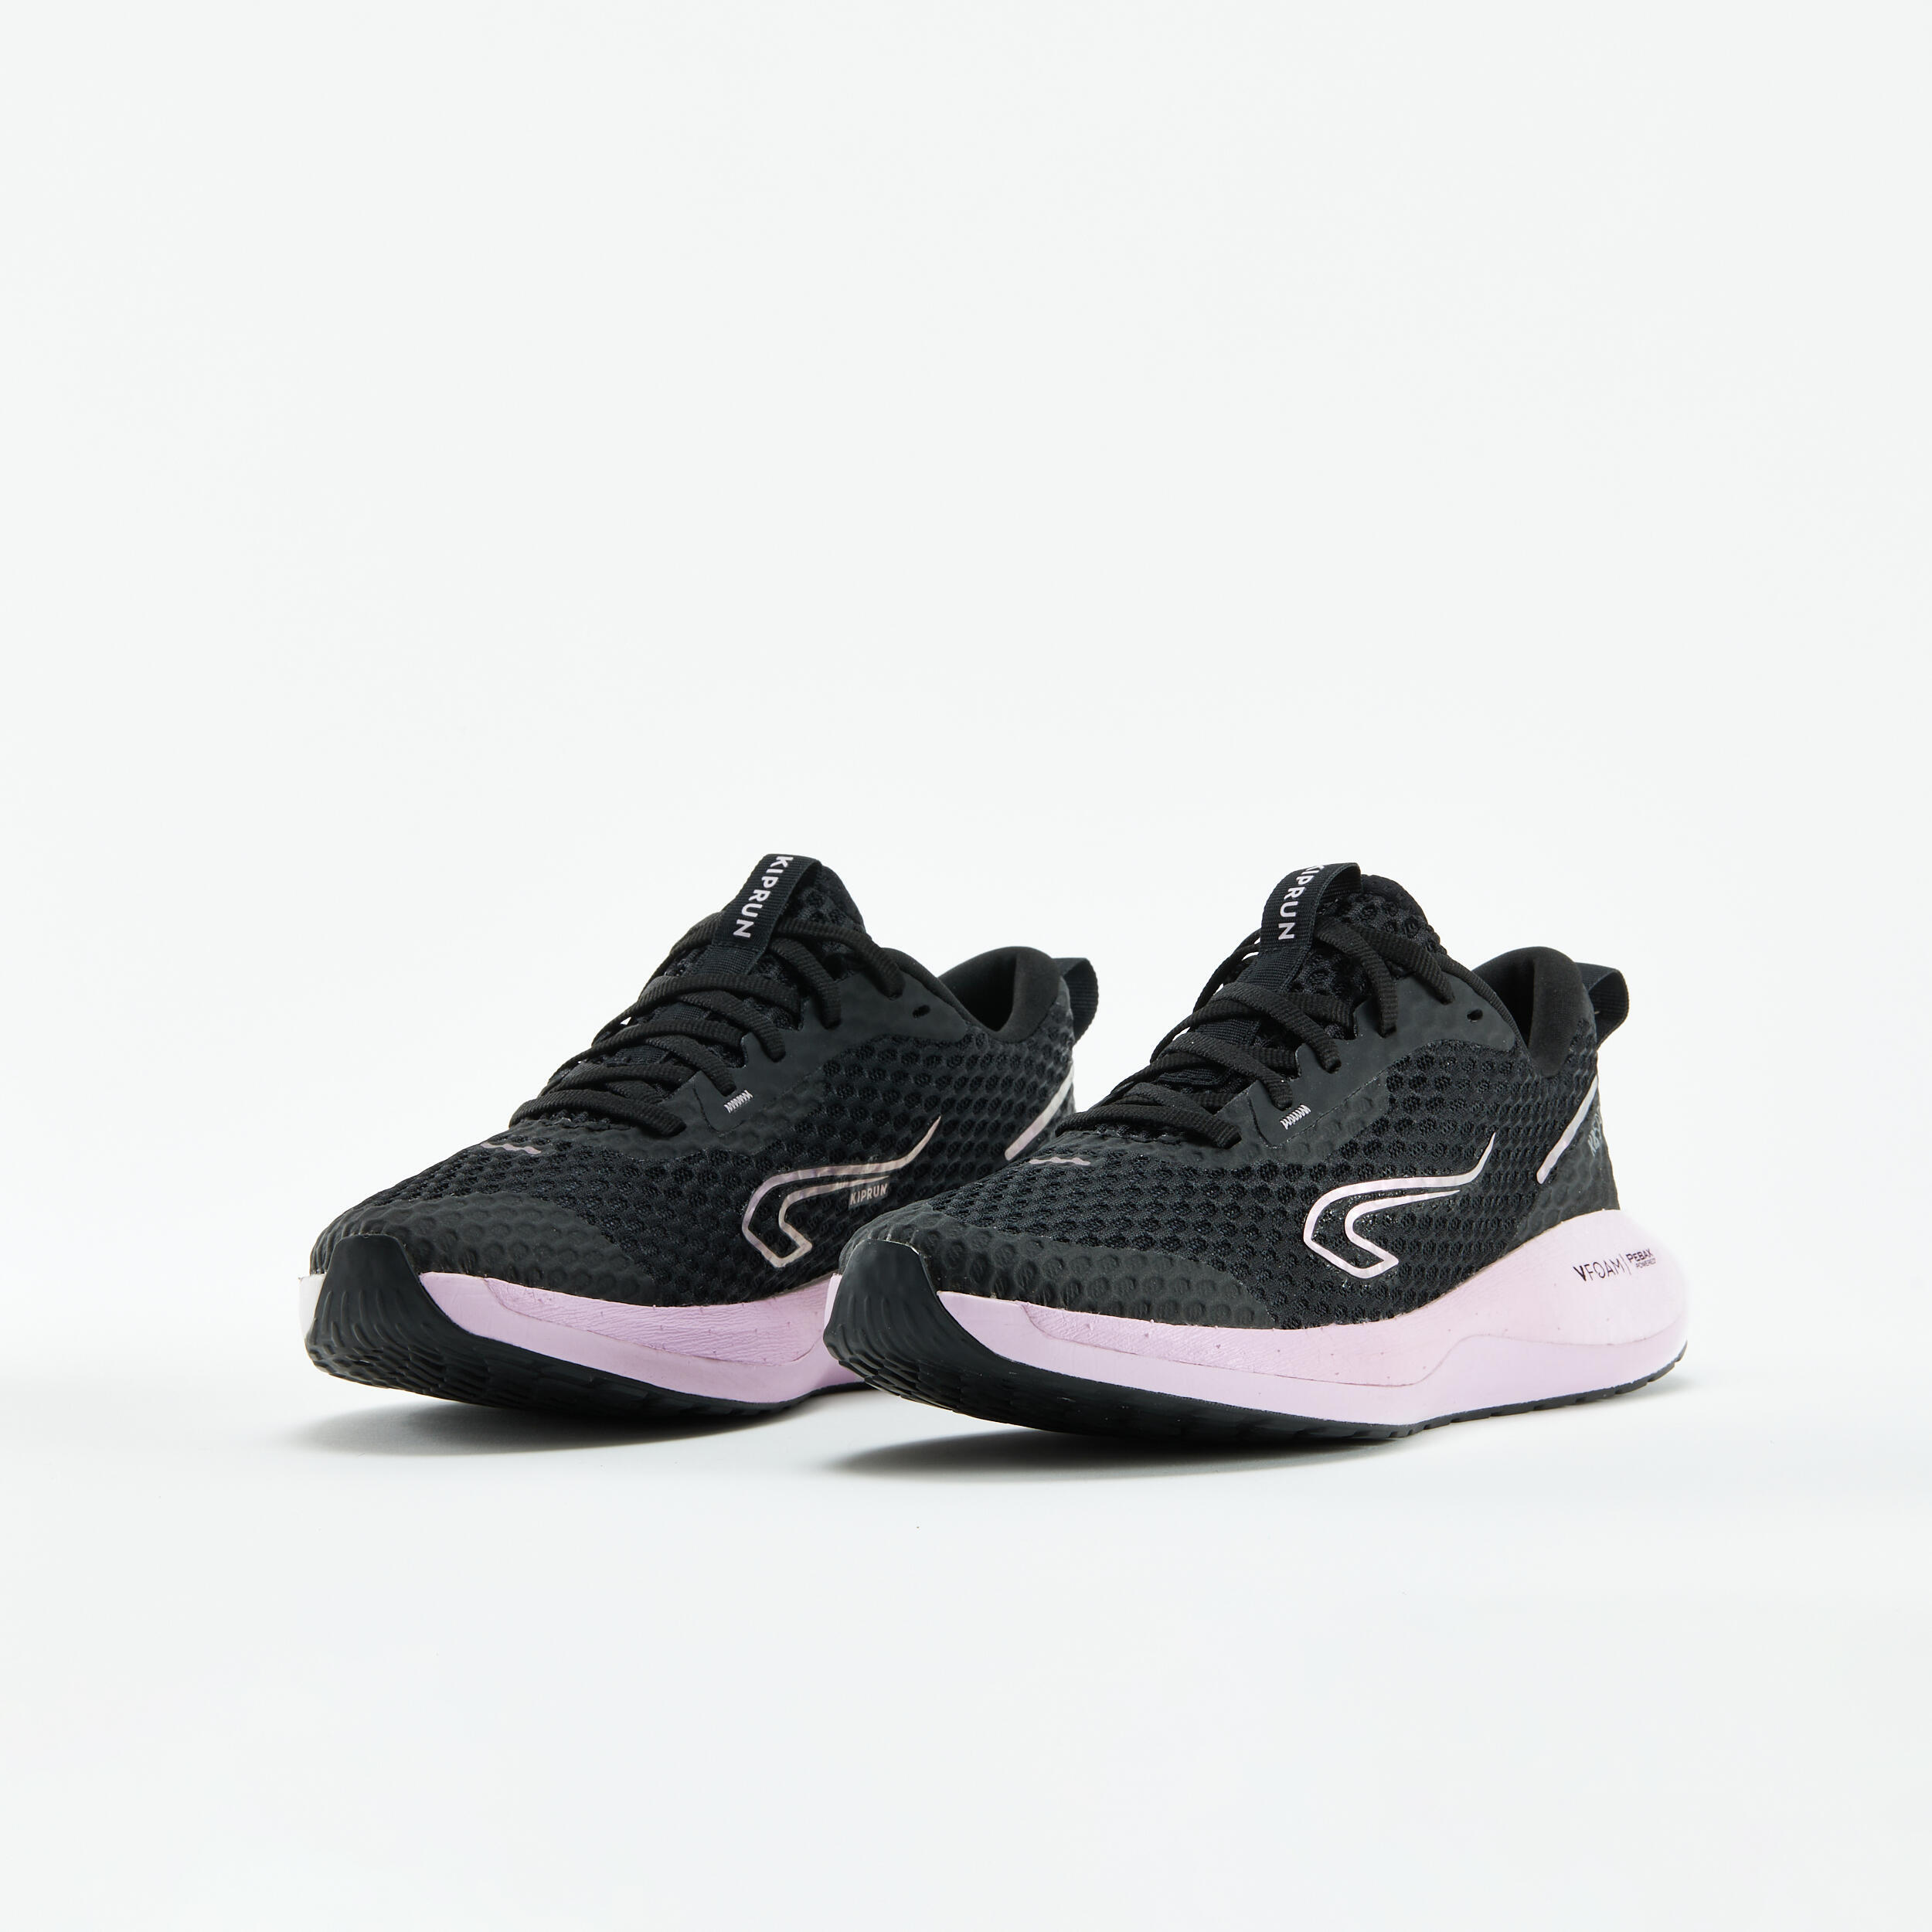 KIPRUN KD500 2 women's running shoes - black/mauve 2/8